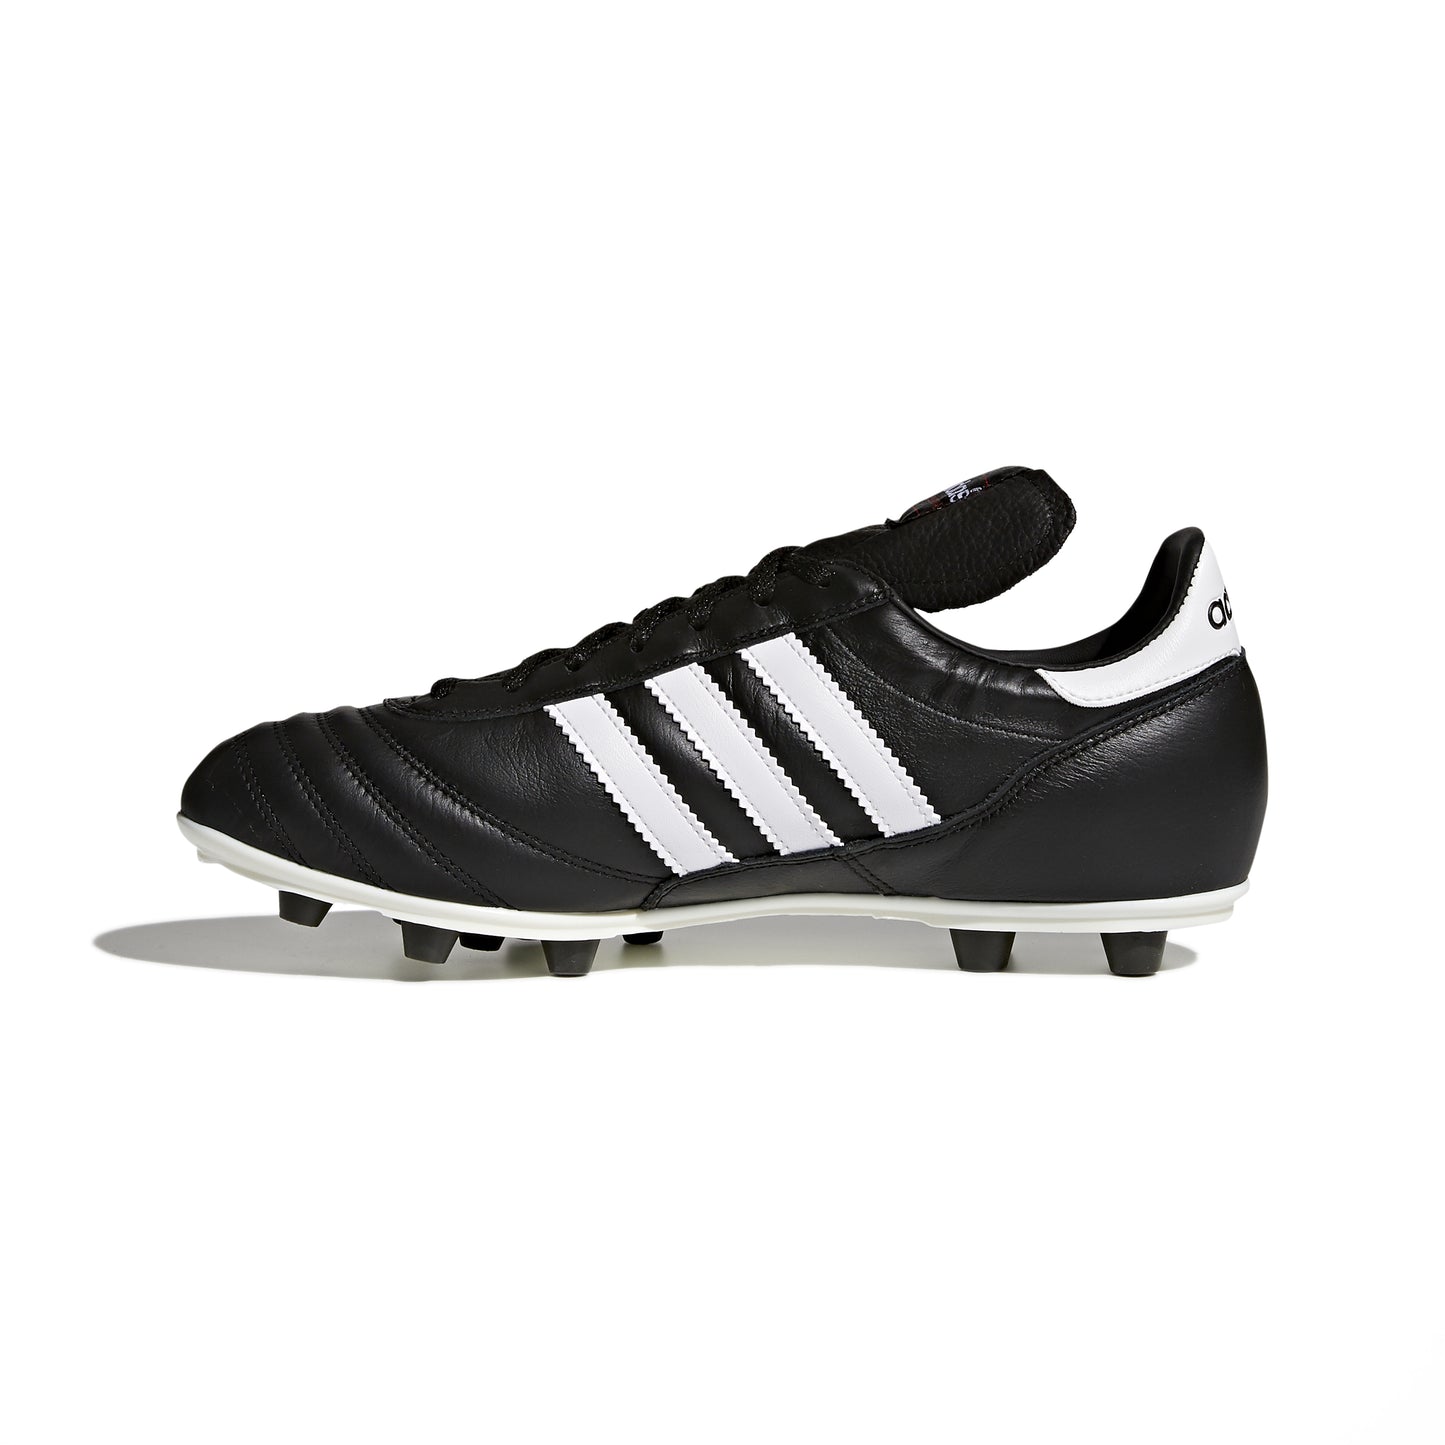 Adidas Copa Mundial FG Football Boots - Black - Queensferry Sports